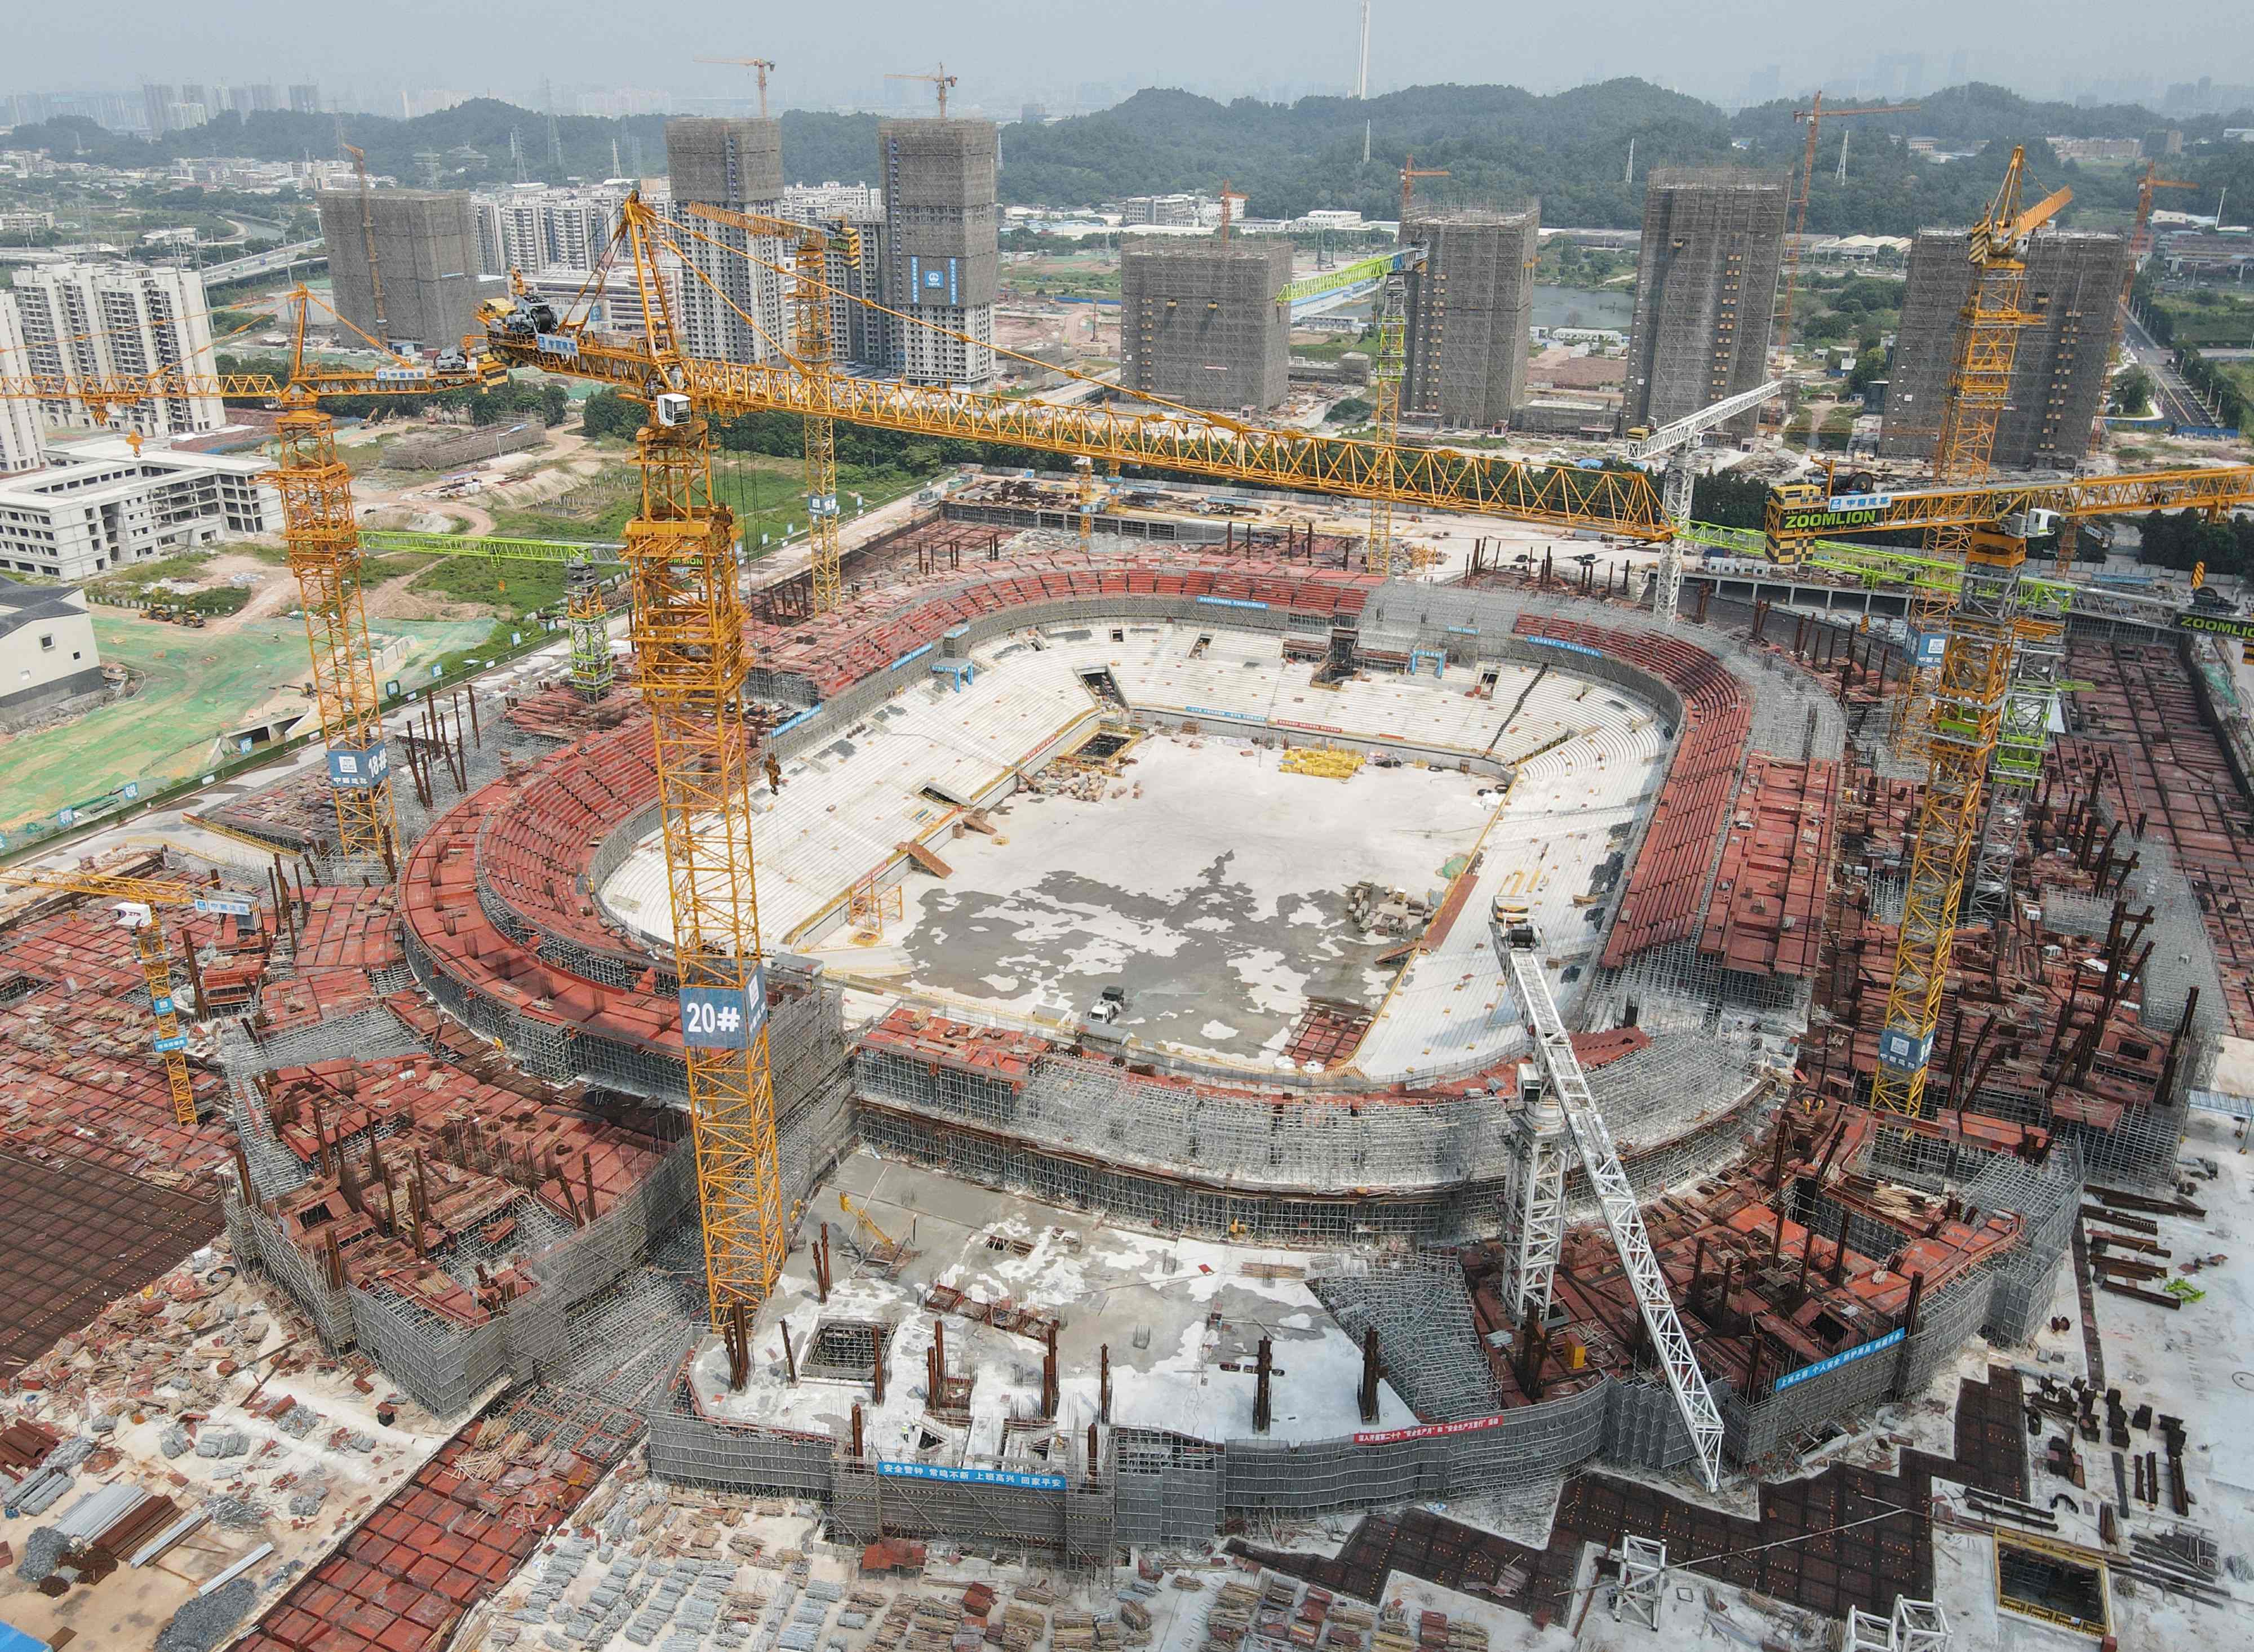 The Guangzhou Evergrande football stadium under construction in Guangzhou